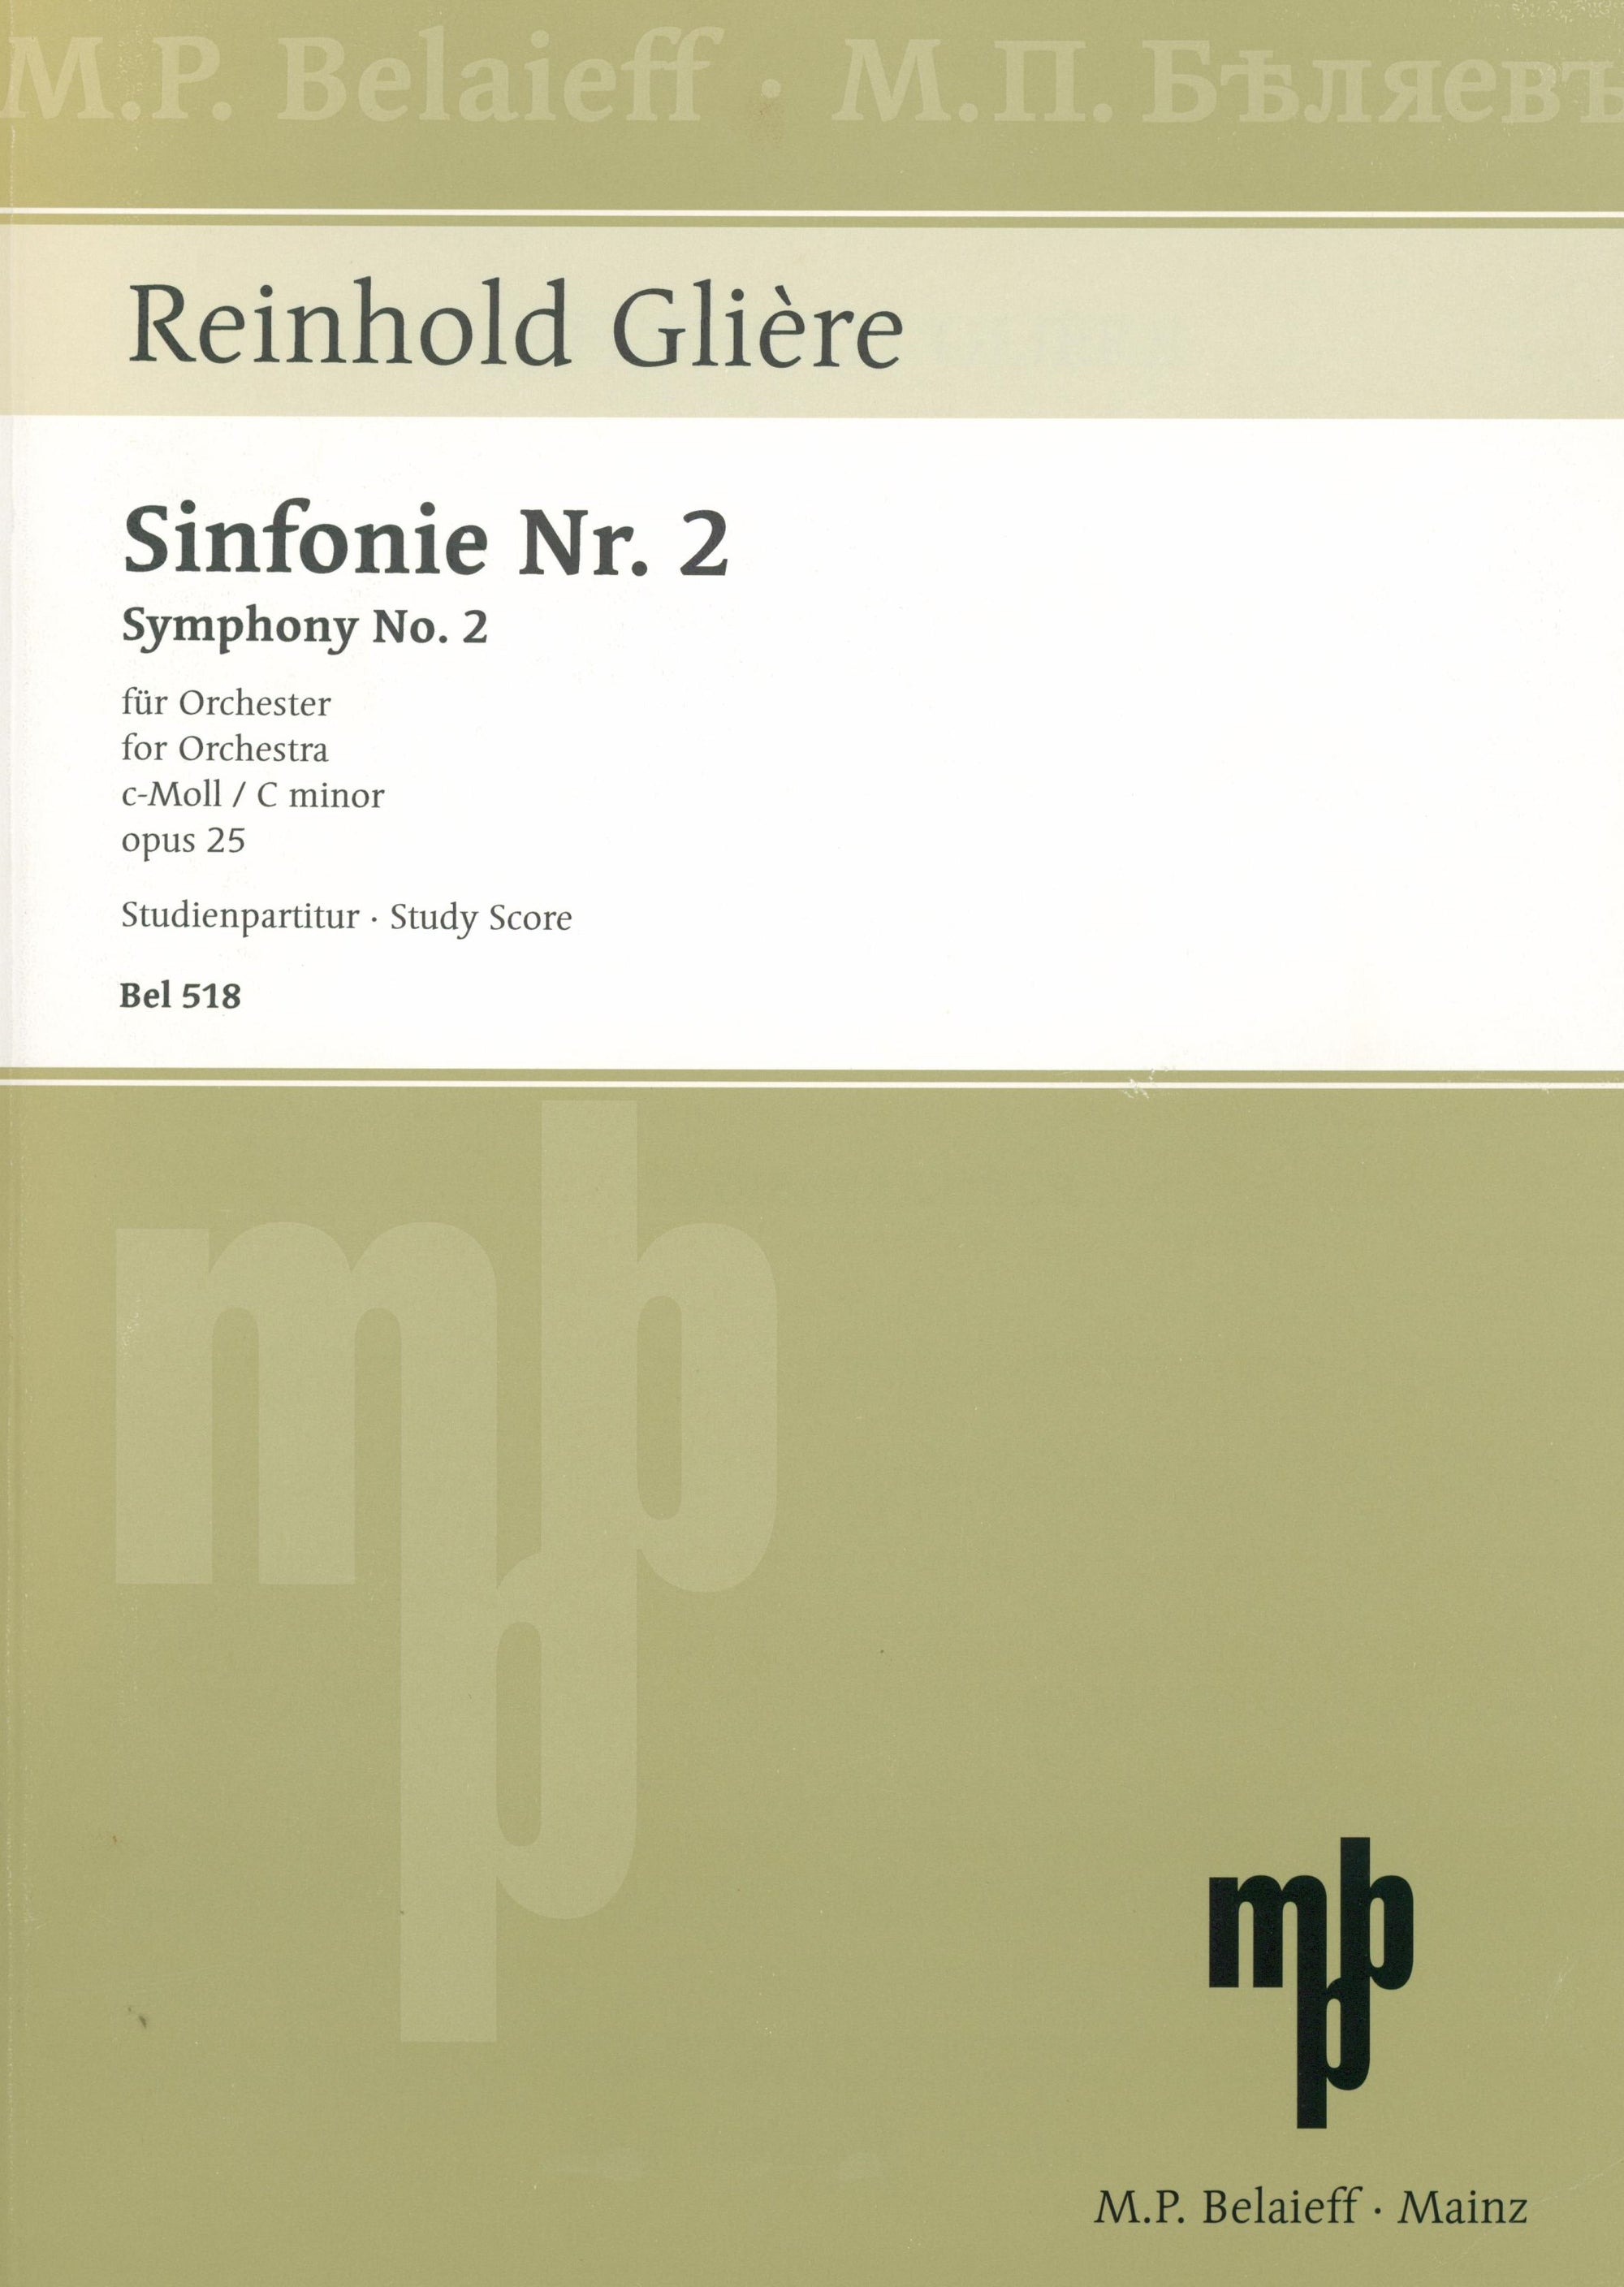 Glière: Symphony No. 2 in C Minor, Op. 25